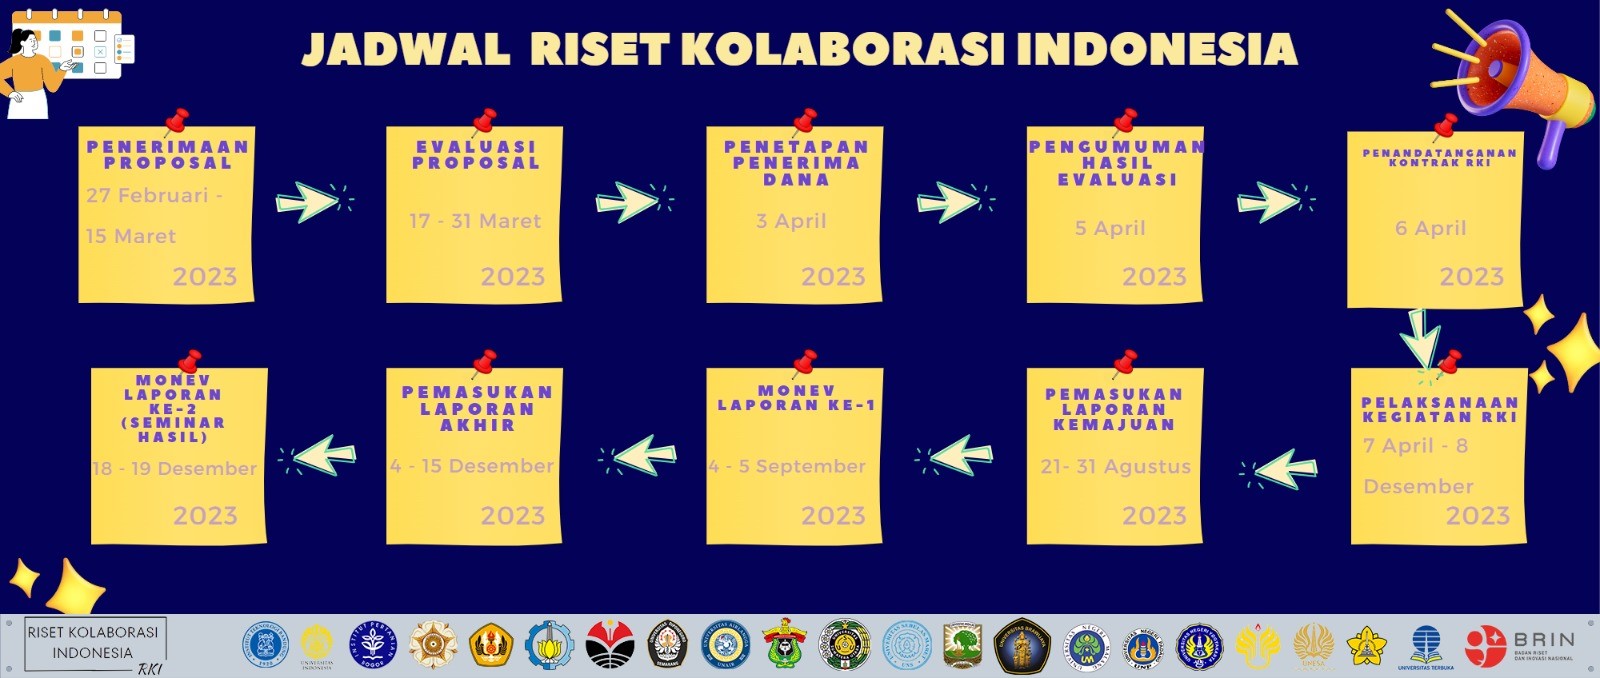 Timeline Riset Kolaborasi Indonesia (RKI) 2023